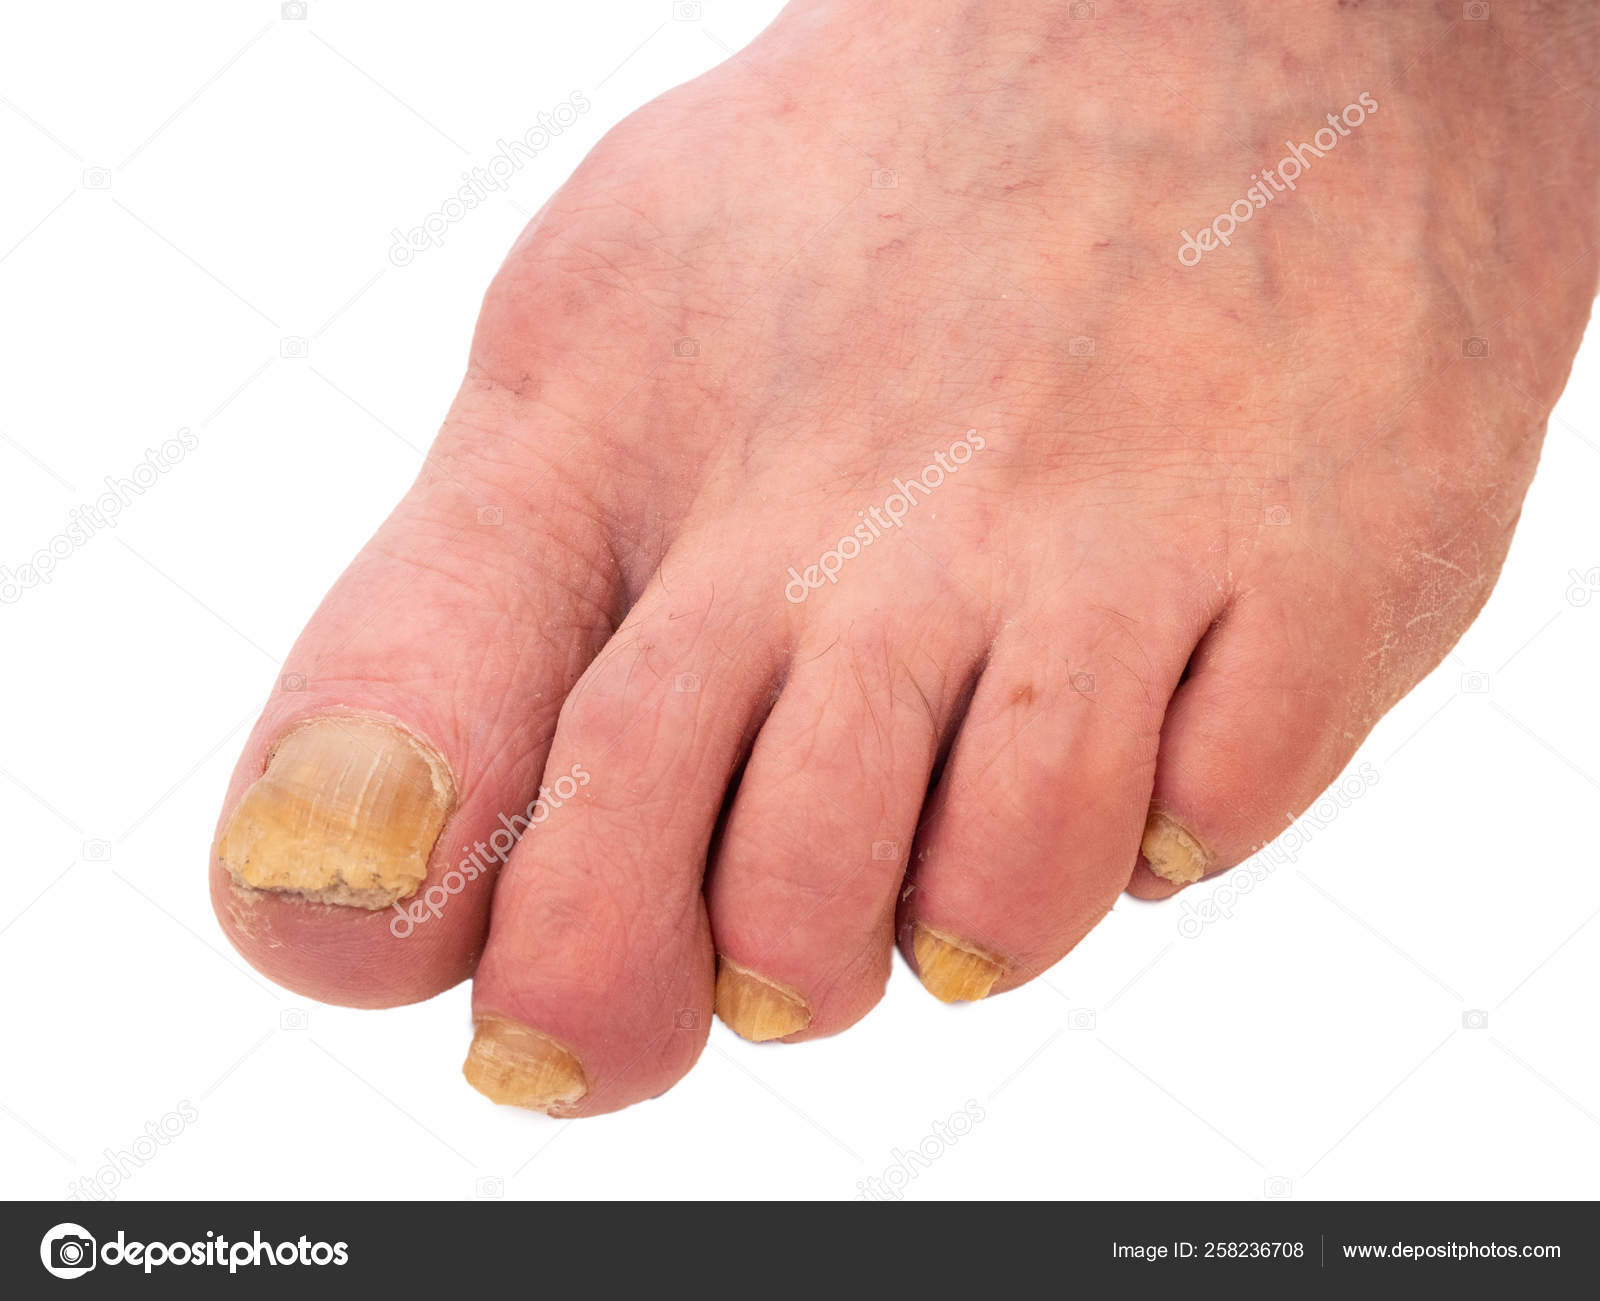 gomba nail foot salt)